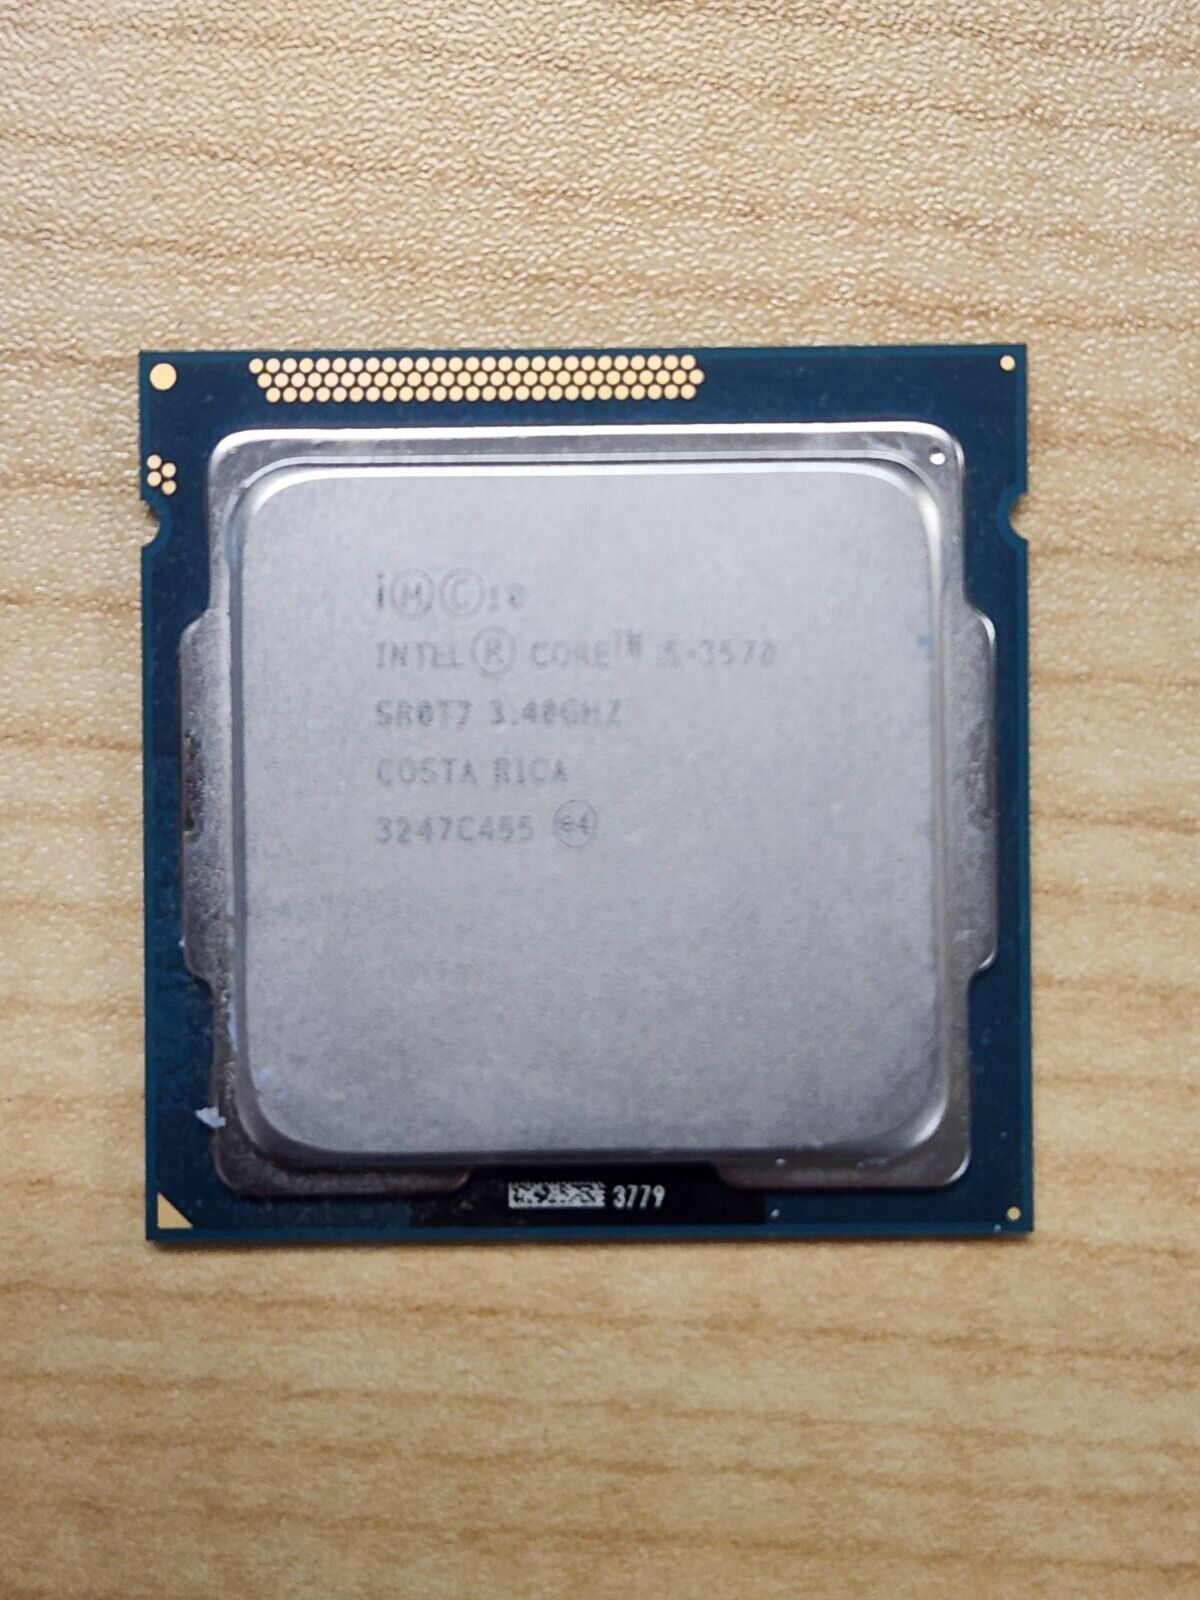 Intel Core i5-3570 3.4 GHz 6 MB Cache LGA 1155 Quad-Core CPU Processor 3rd Gen